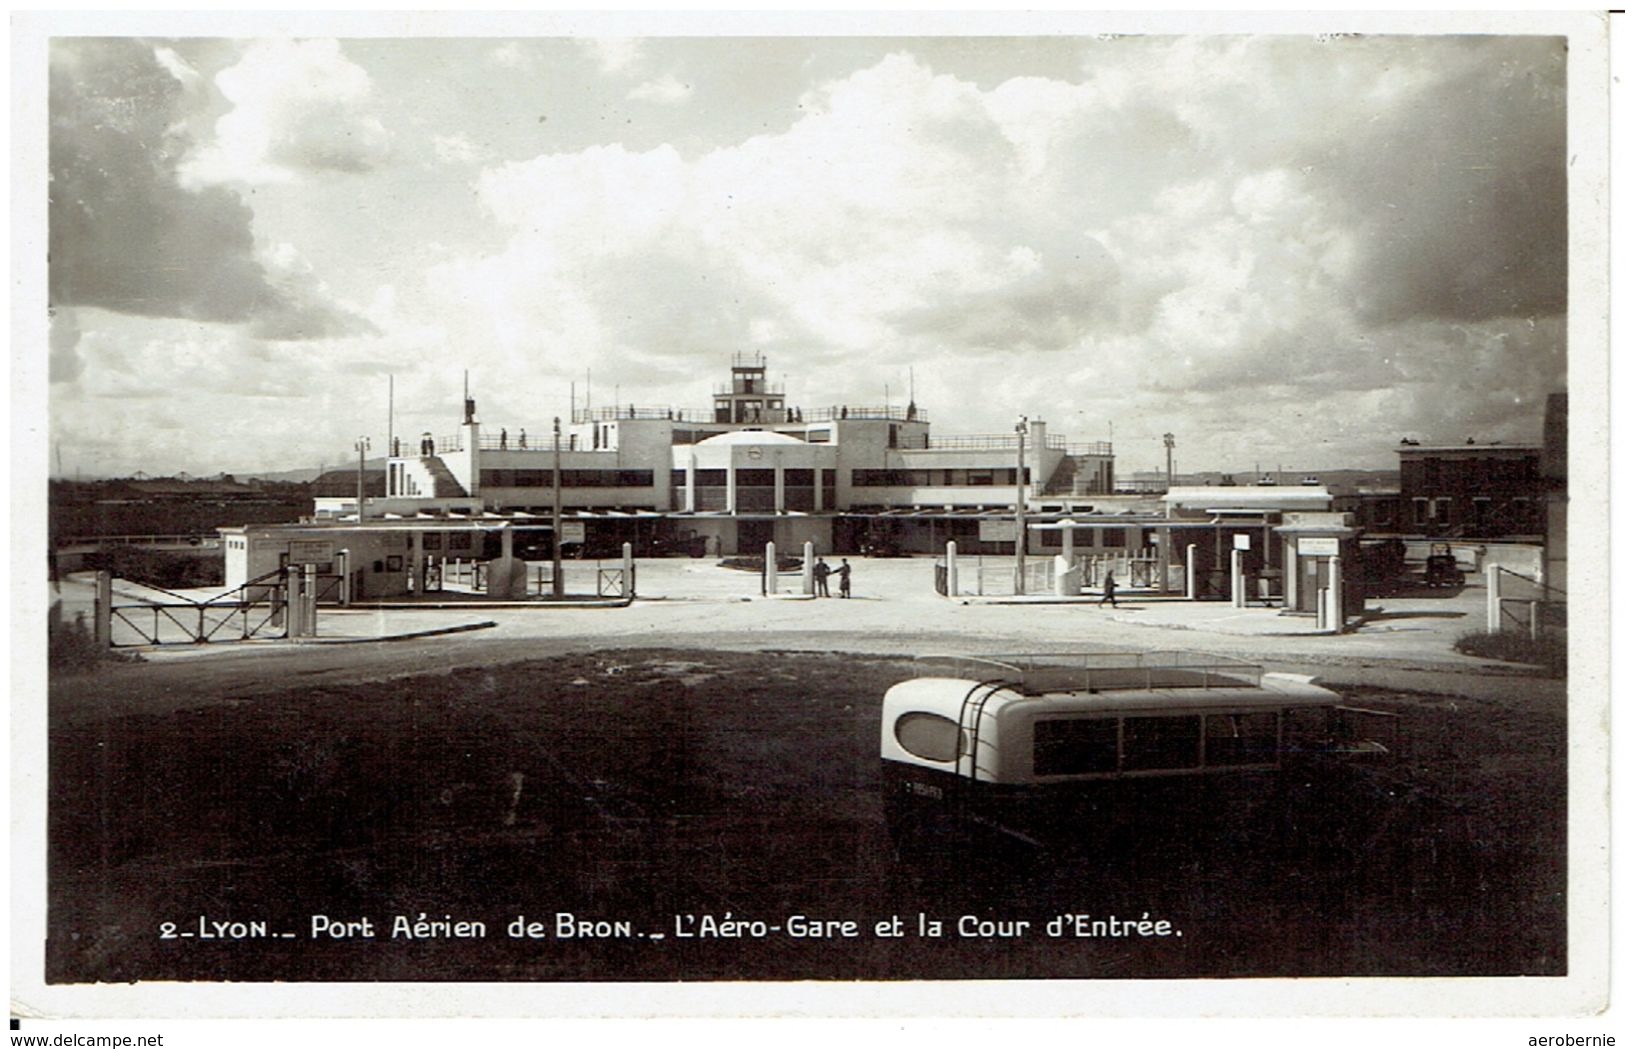 Alte Karte LYON - Aerogare (Eingangsgebäude) - 1940er Jahre - Aerodrome